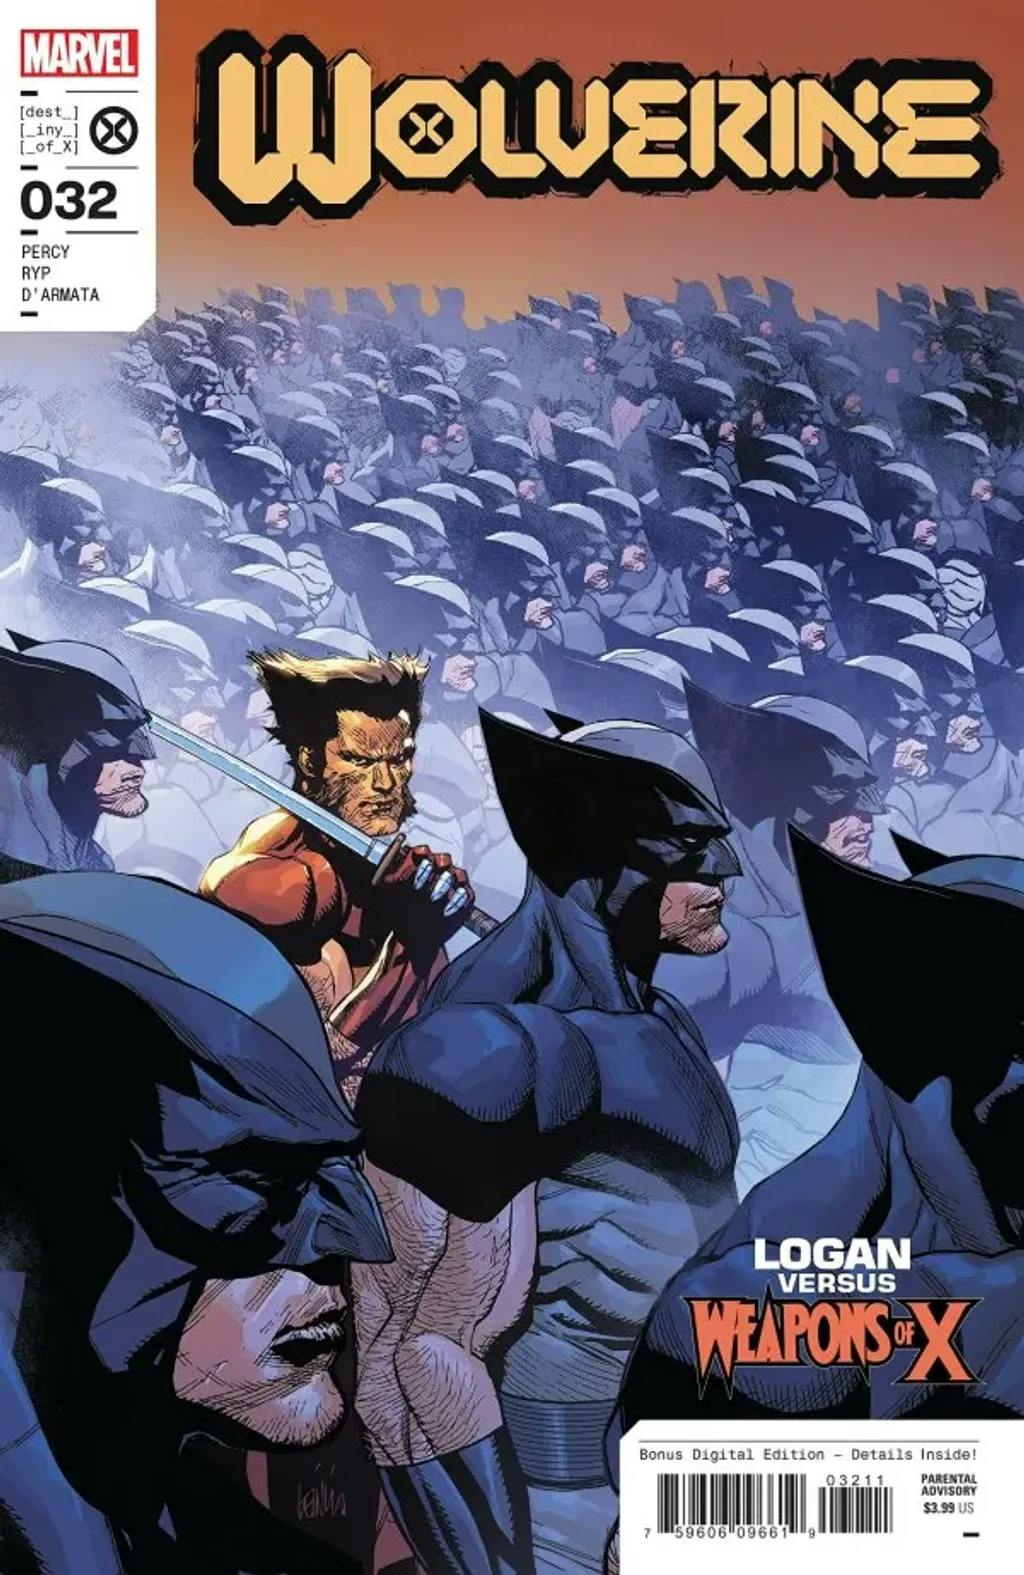 Wolverine #32 By Benjamin Percy, Juan Joe Ryp, and Frank D’Armata